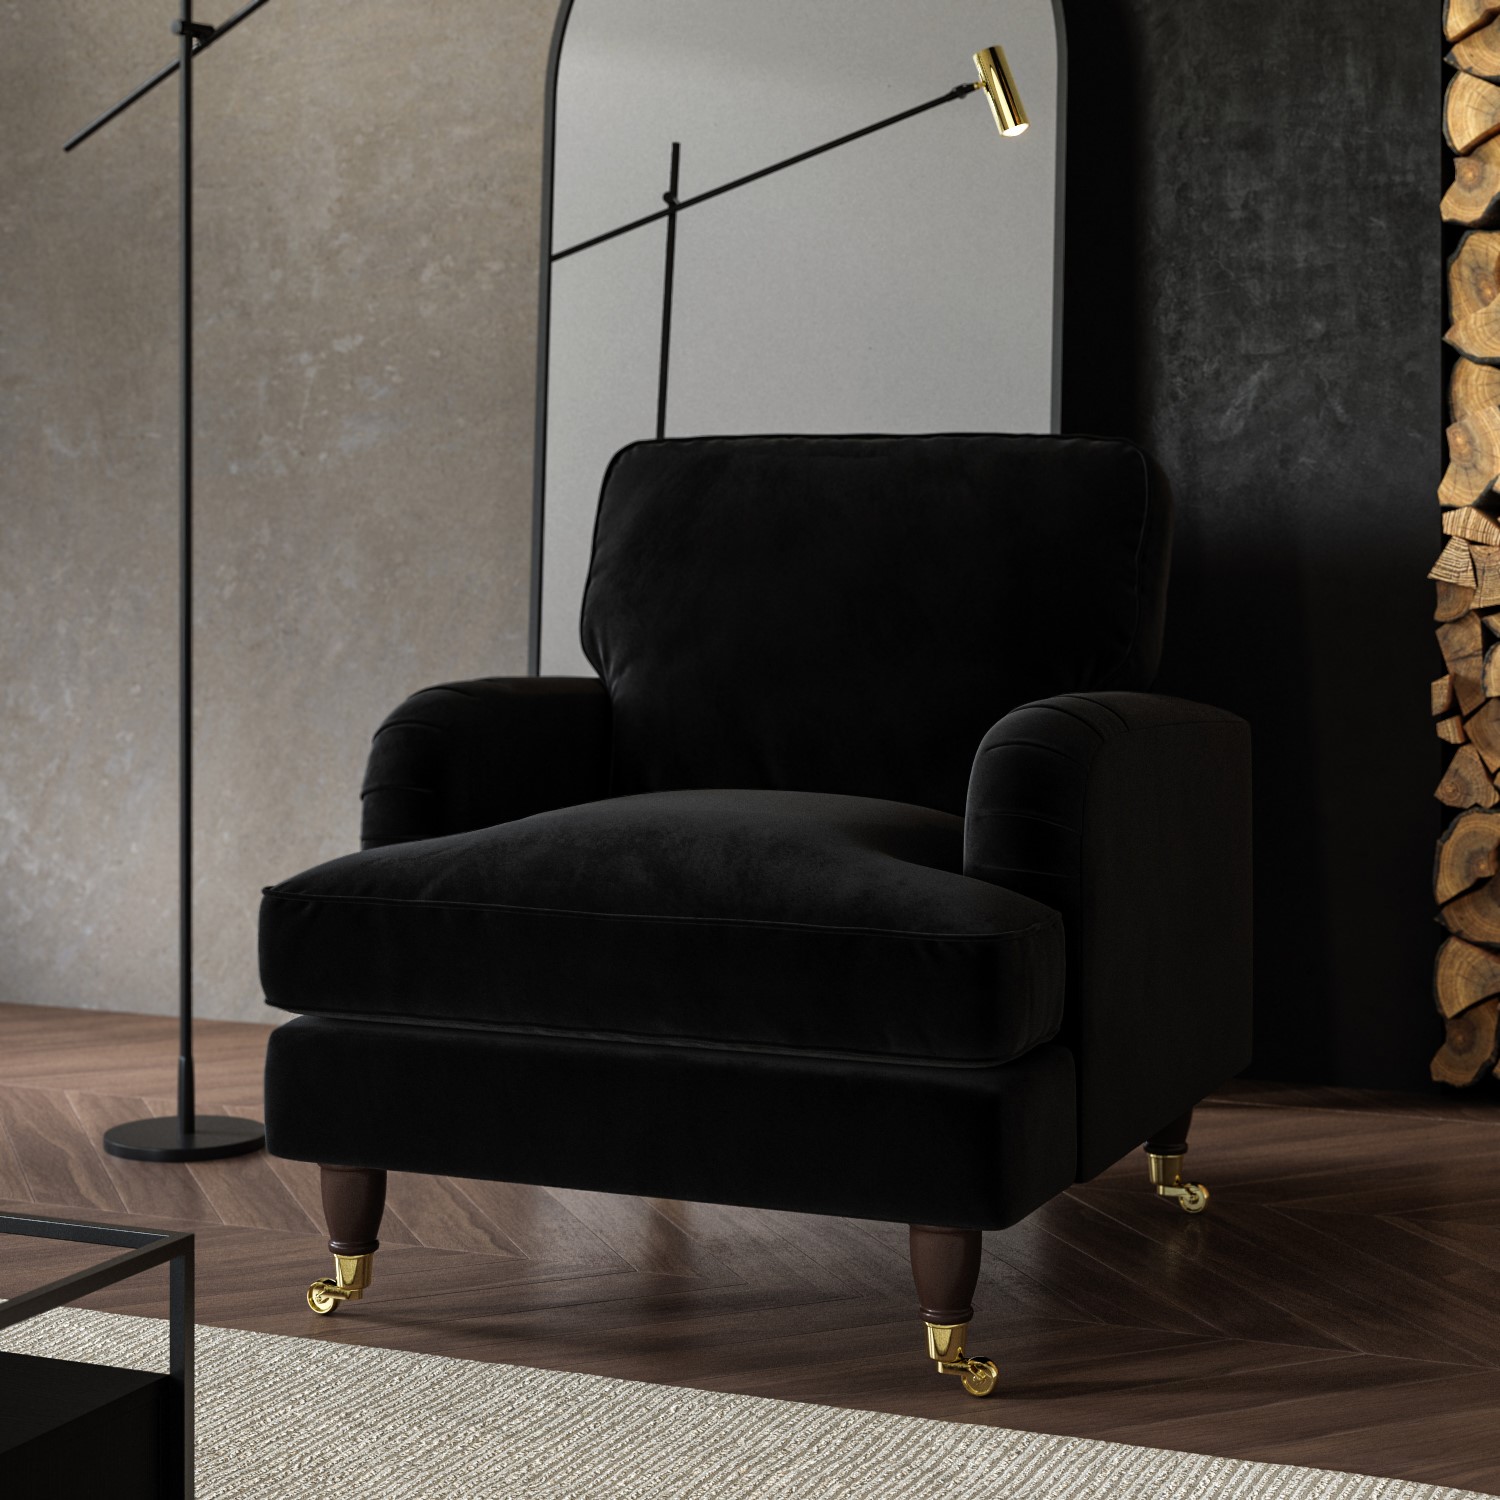 Read more about Black velvet armchair payton